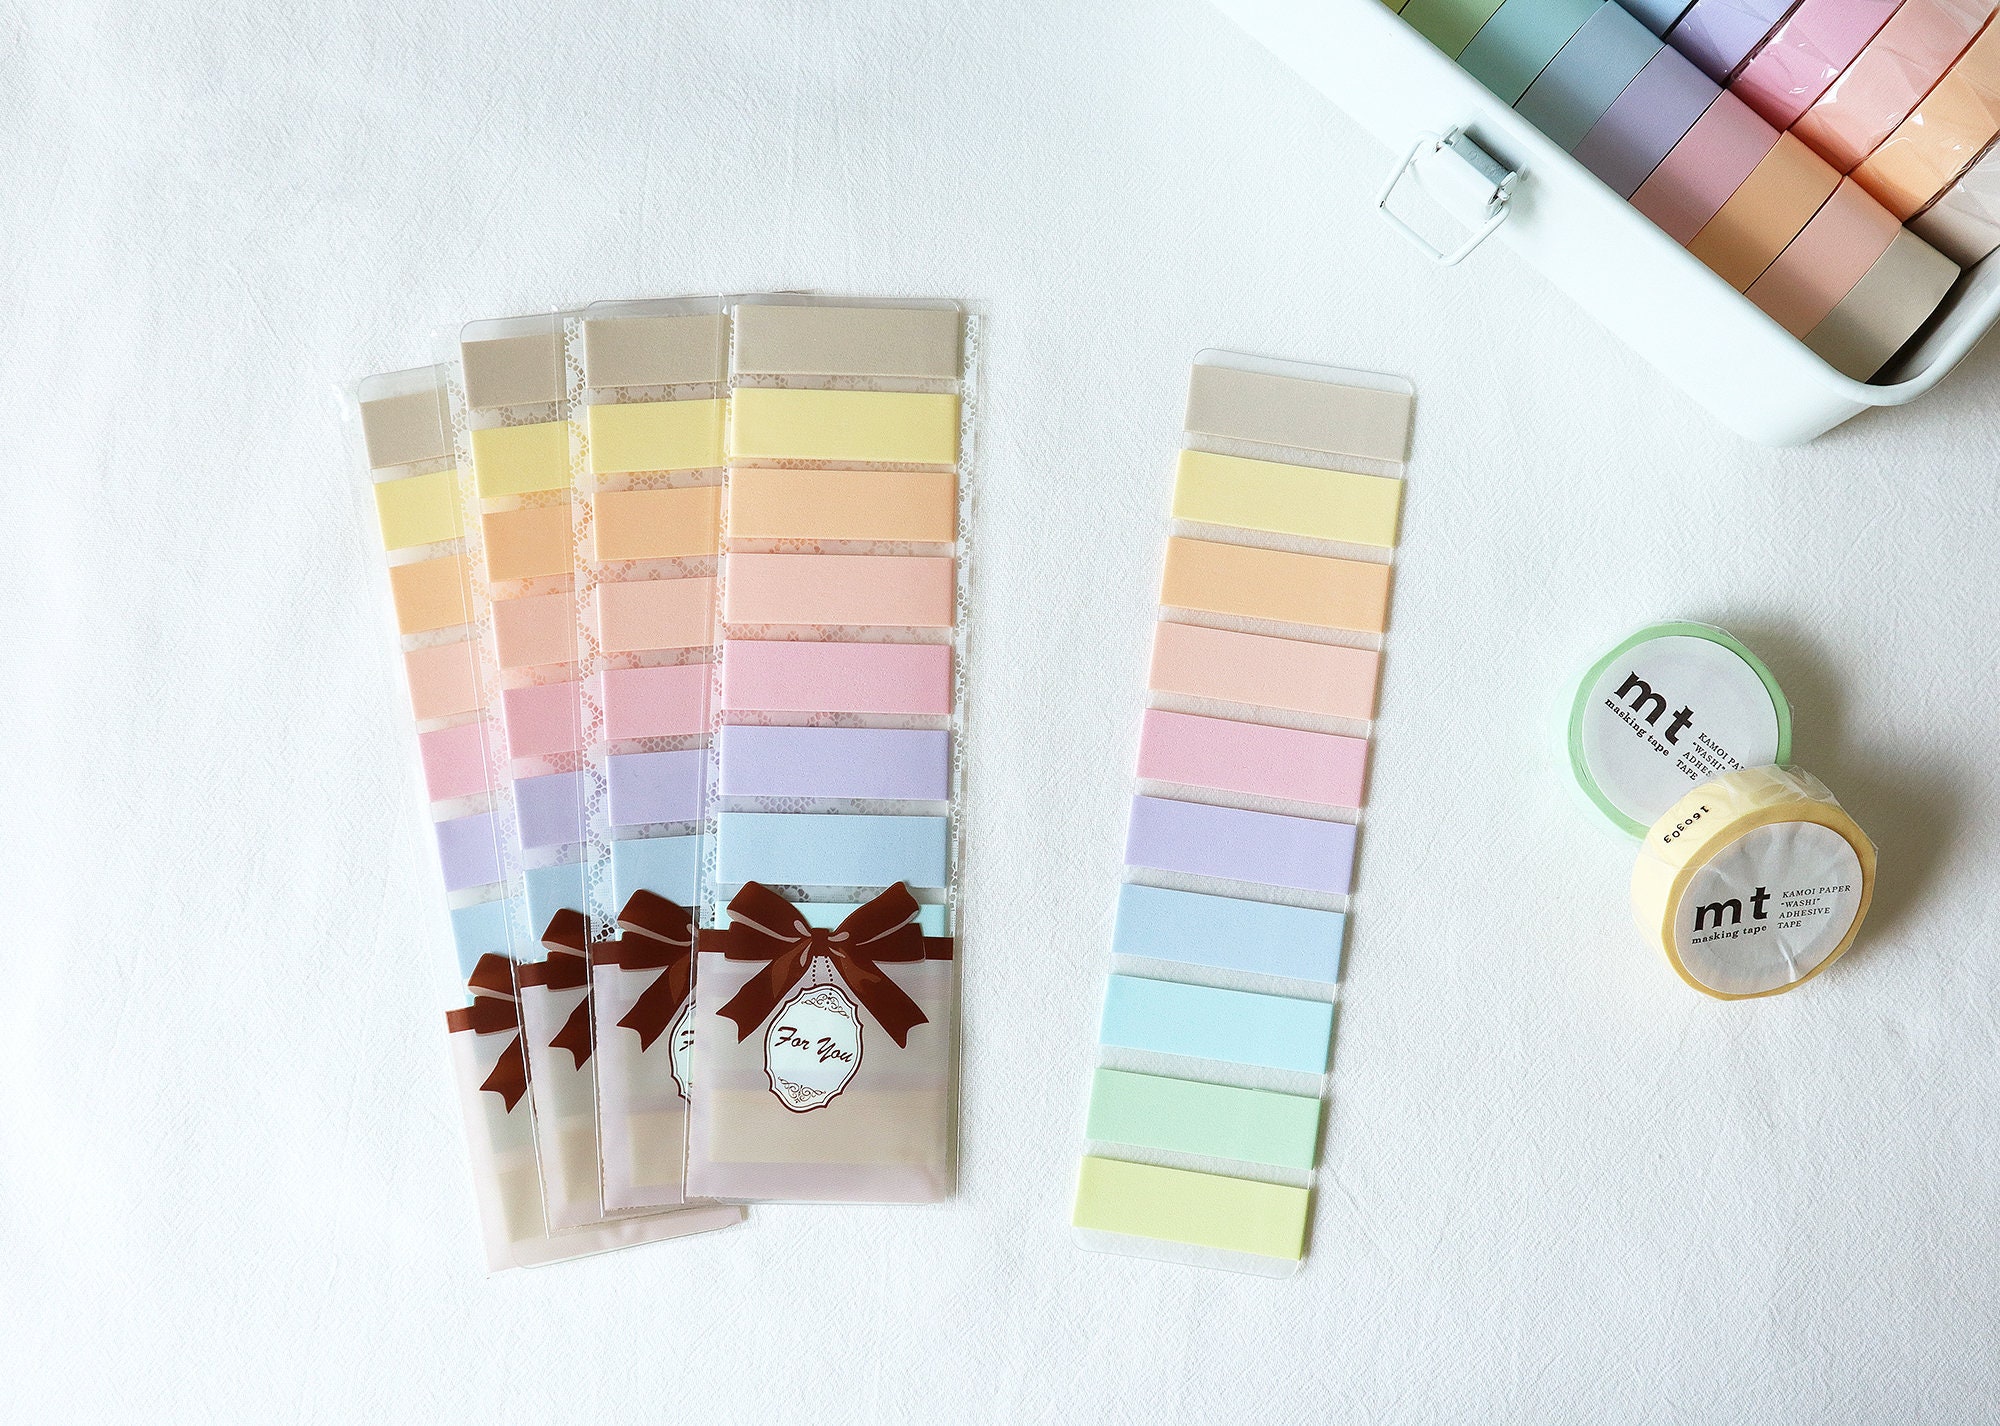 7 Pastel Colors Washi Tape 12 Rolls Set